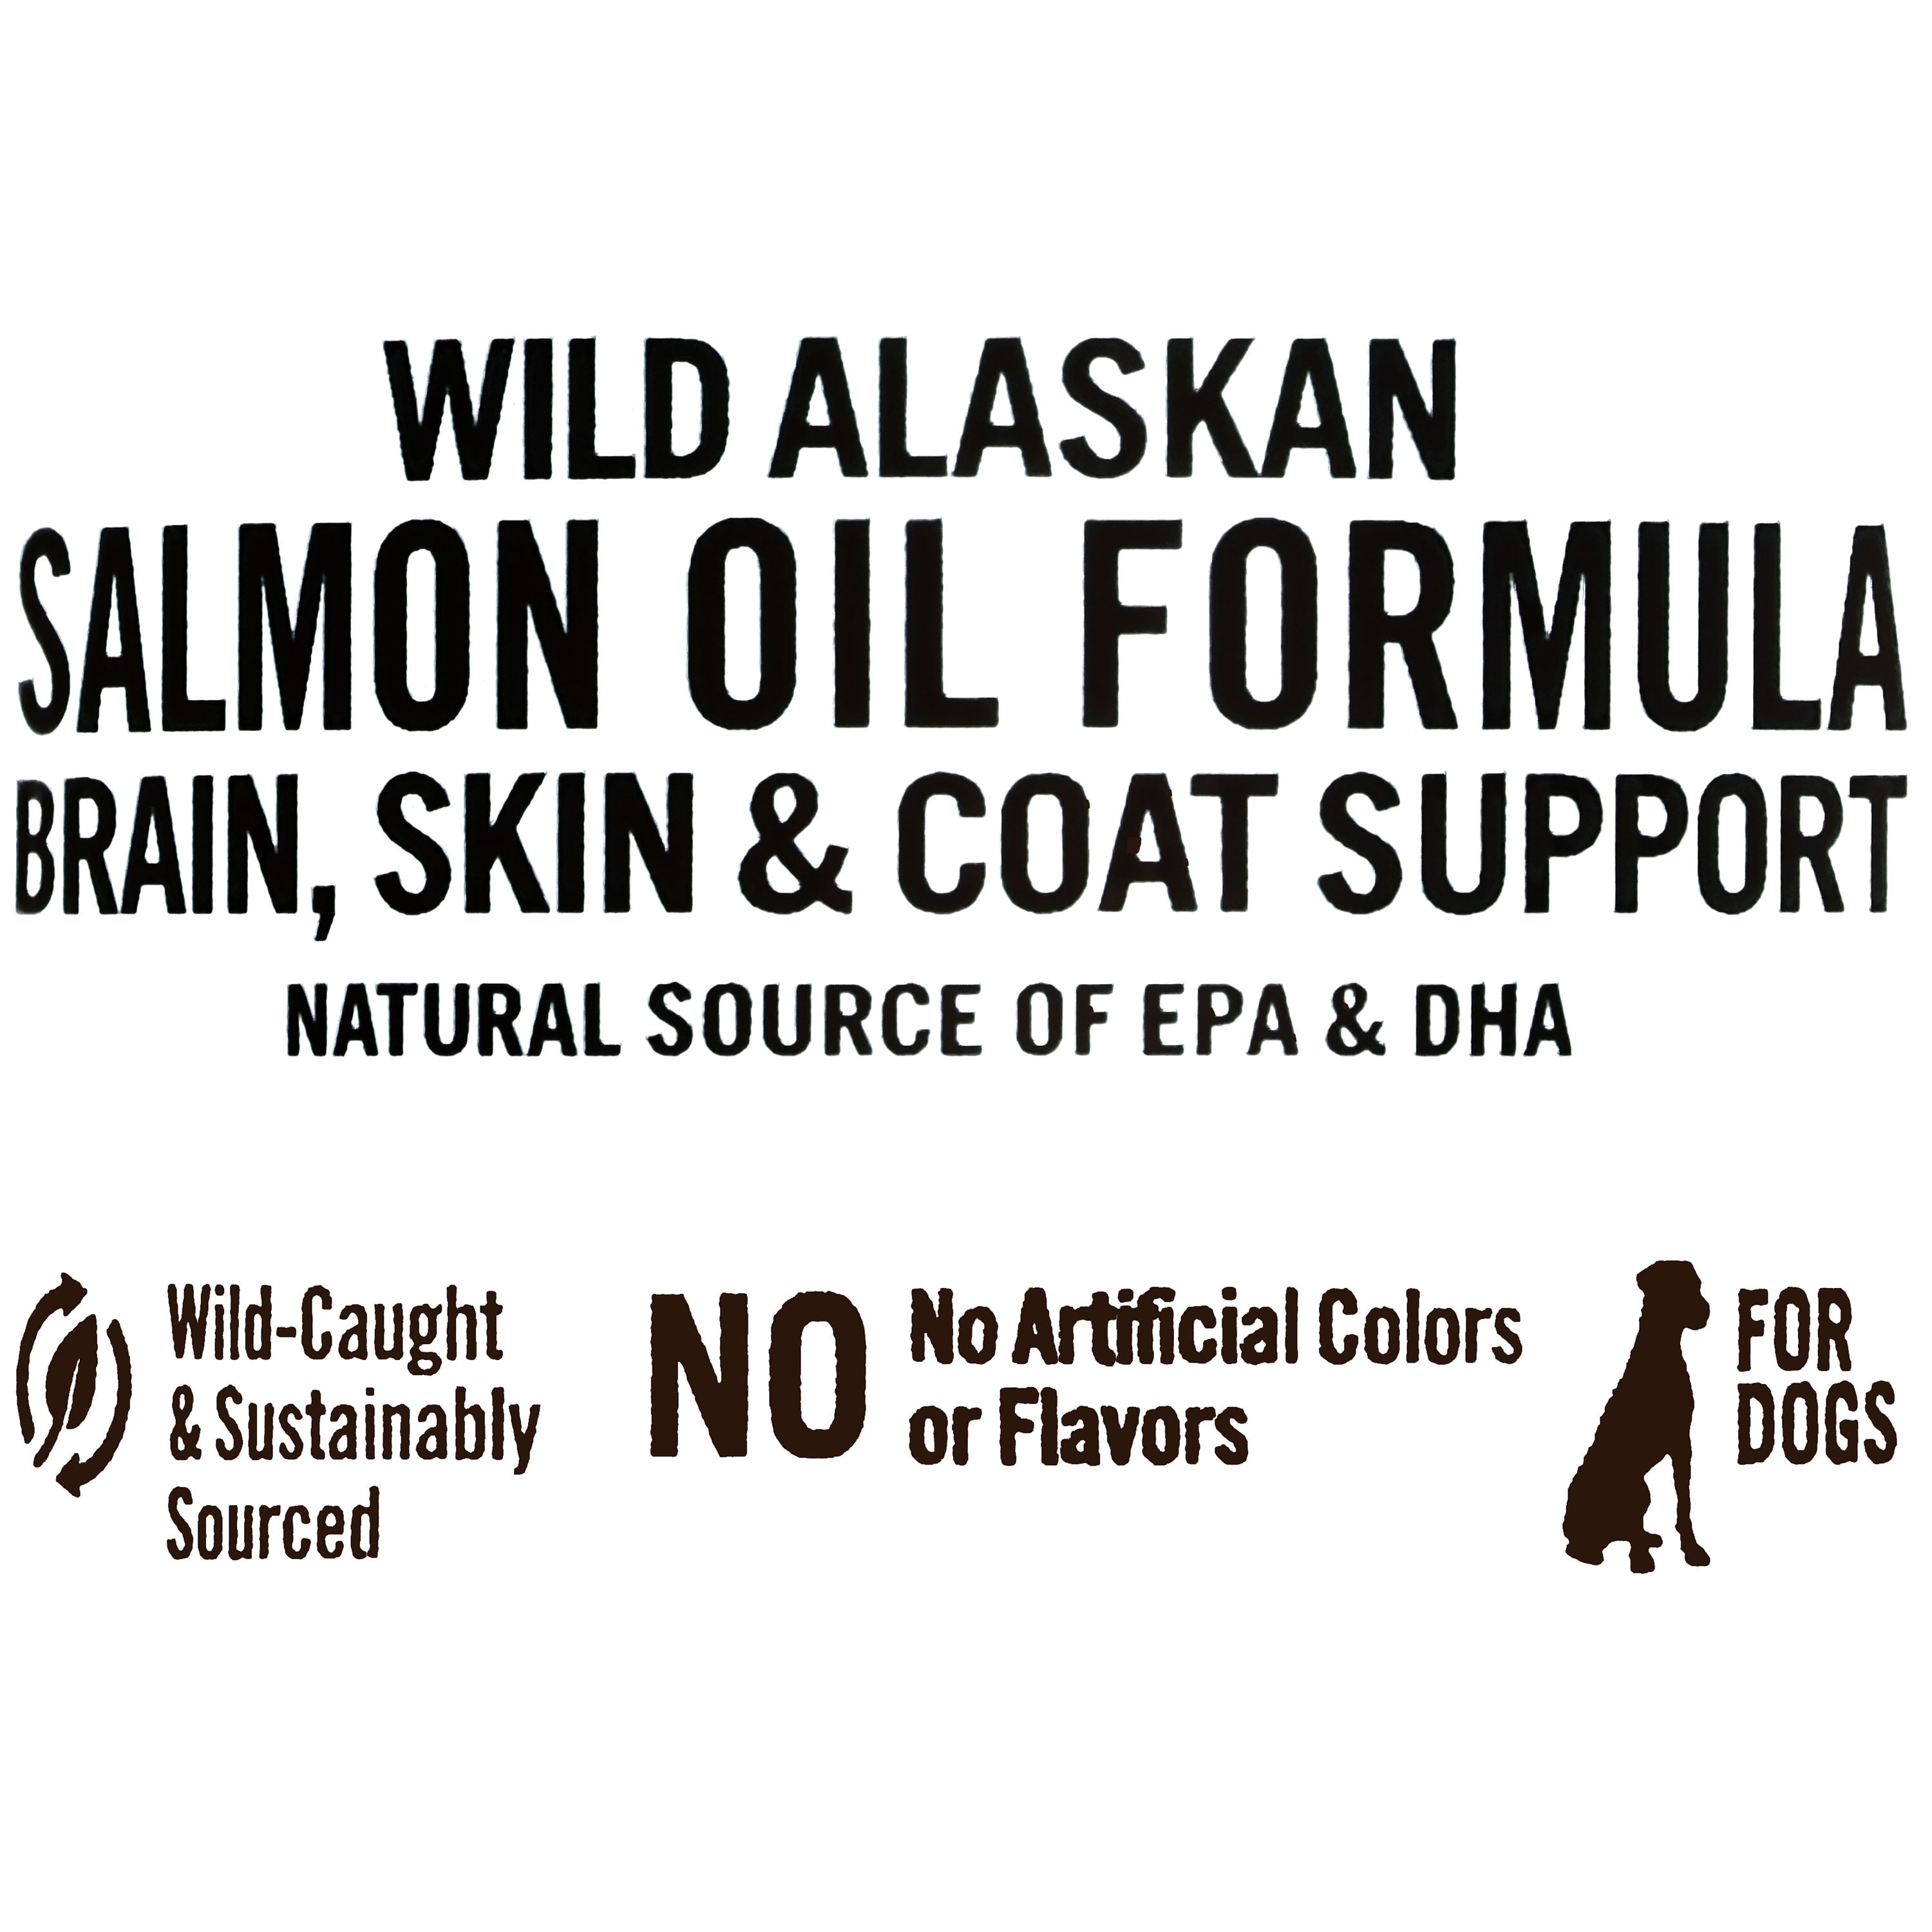 Pure Balance Pro Plus Wild Alaskan Salmon Oil Blend, Brain, Skin & Coat Care for Dogs, 8 oz